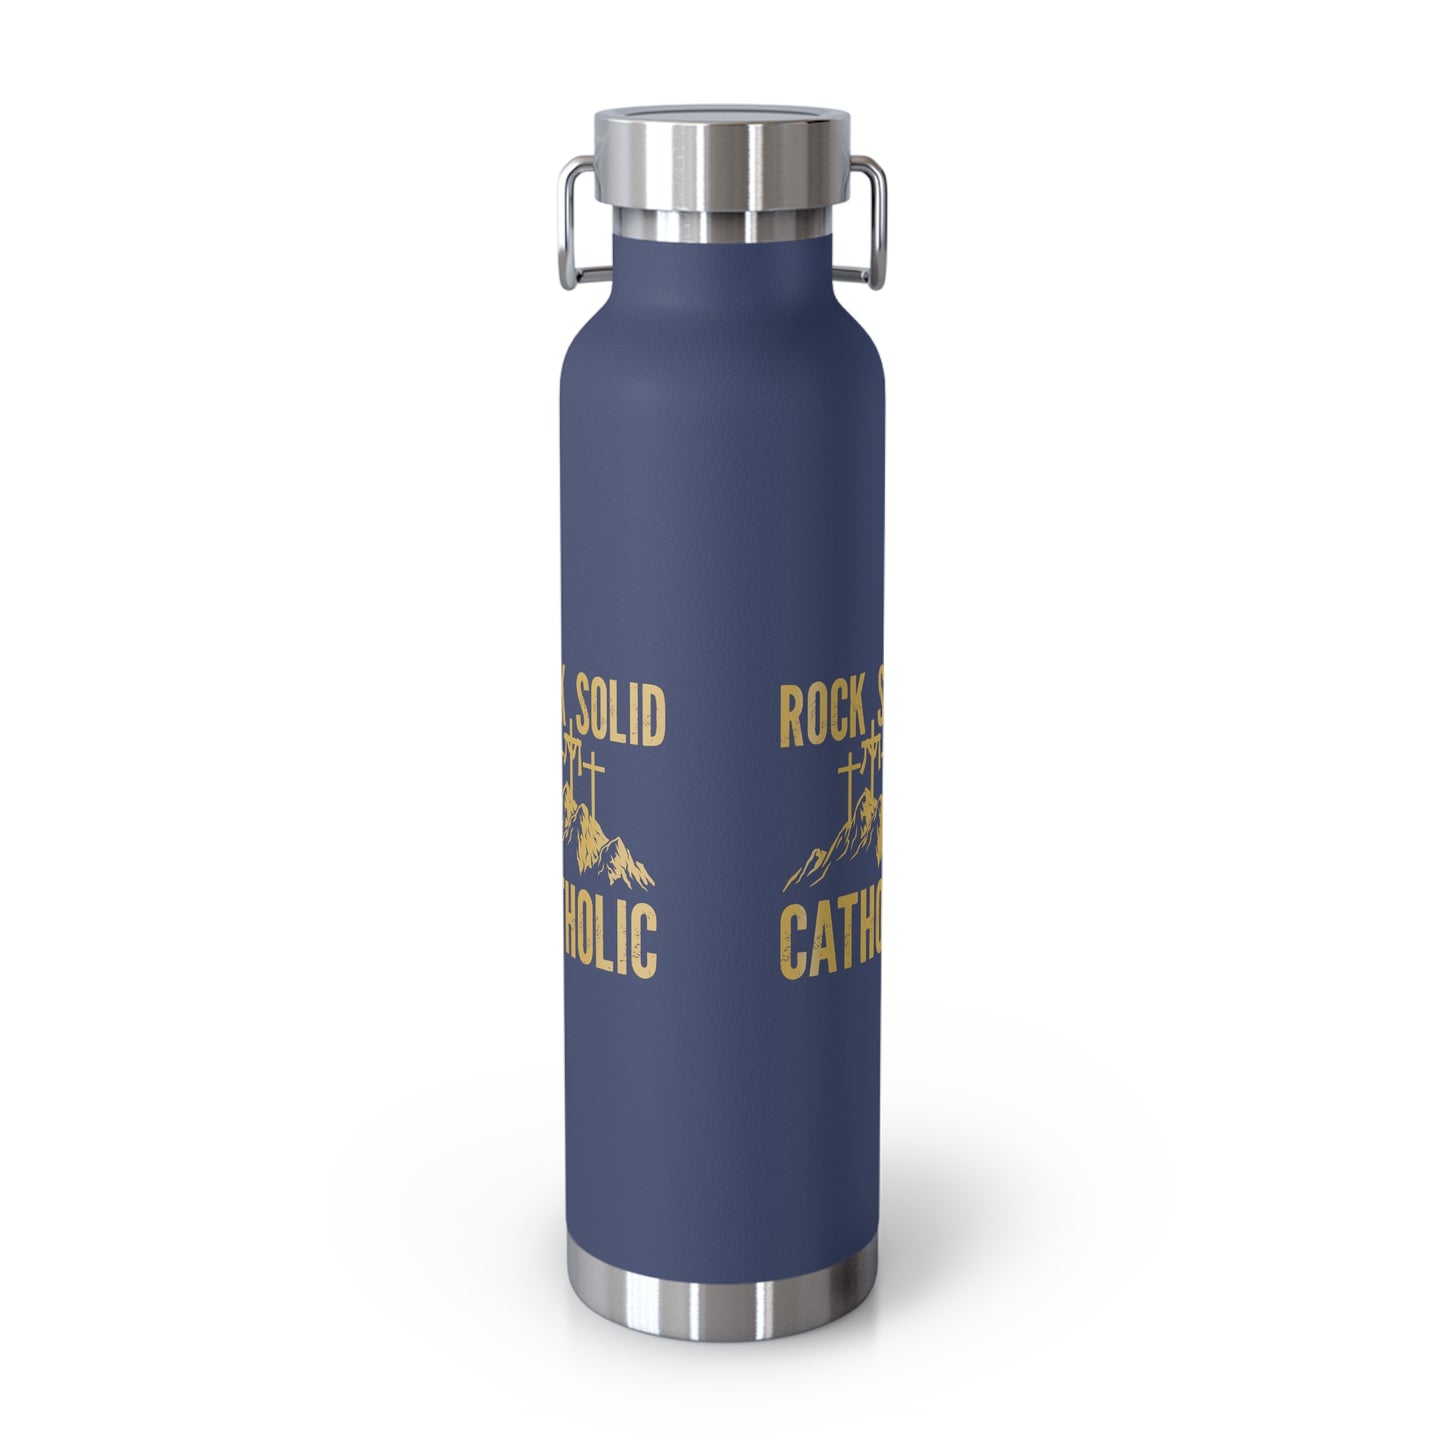 Rock Solid Catholic Copper Vacuum Insulated Bottle, 22oz